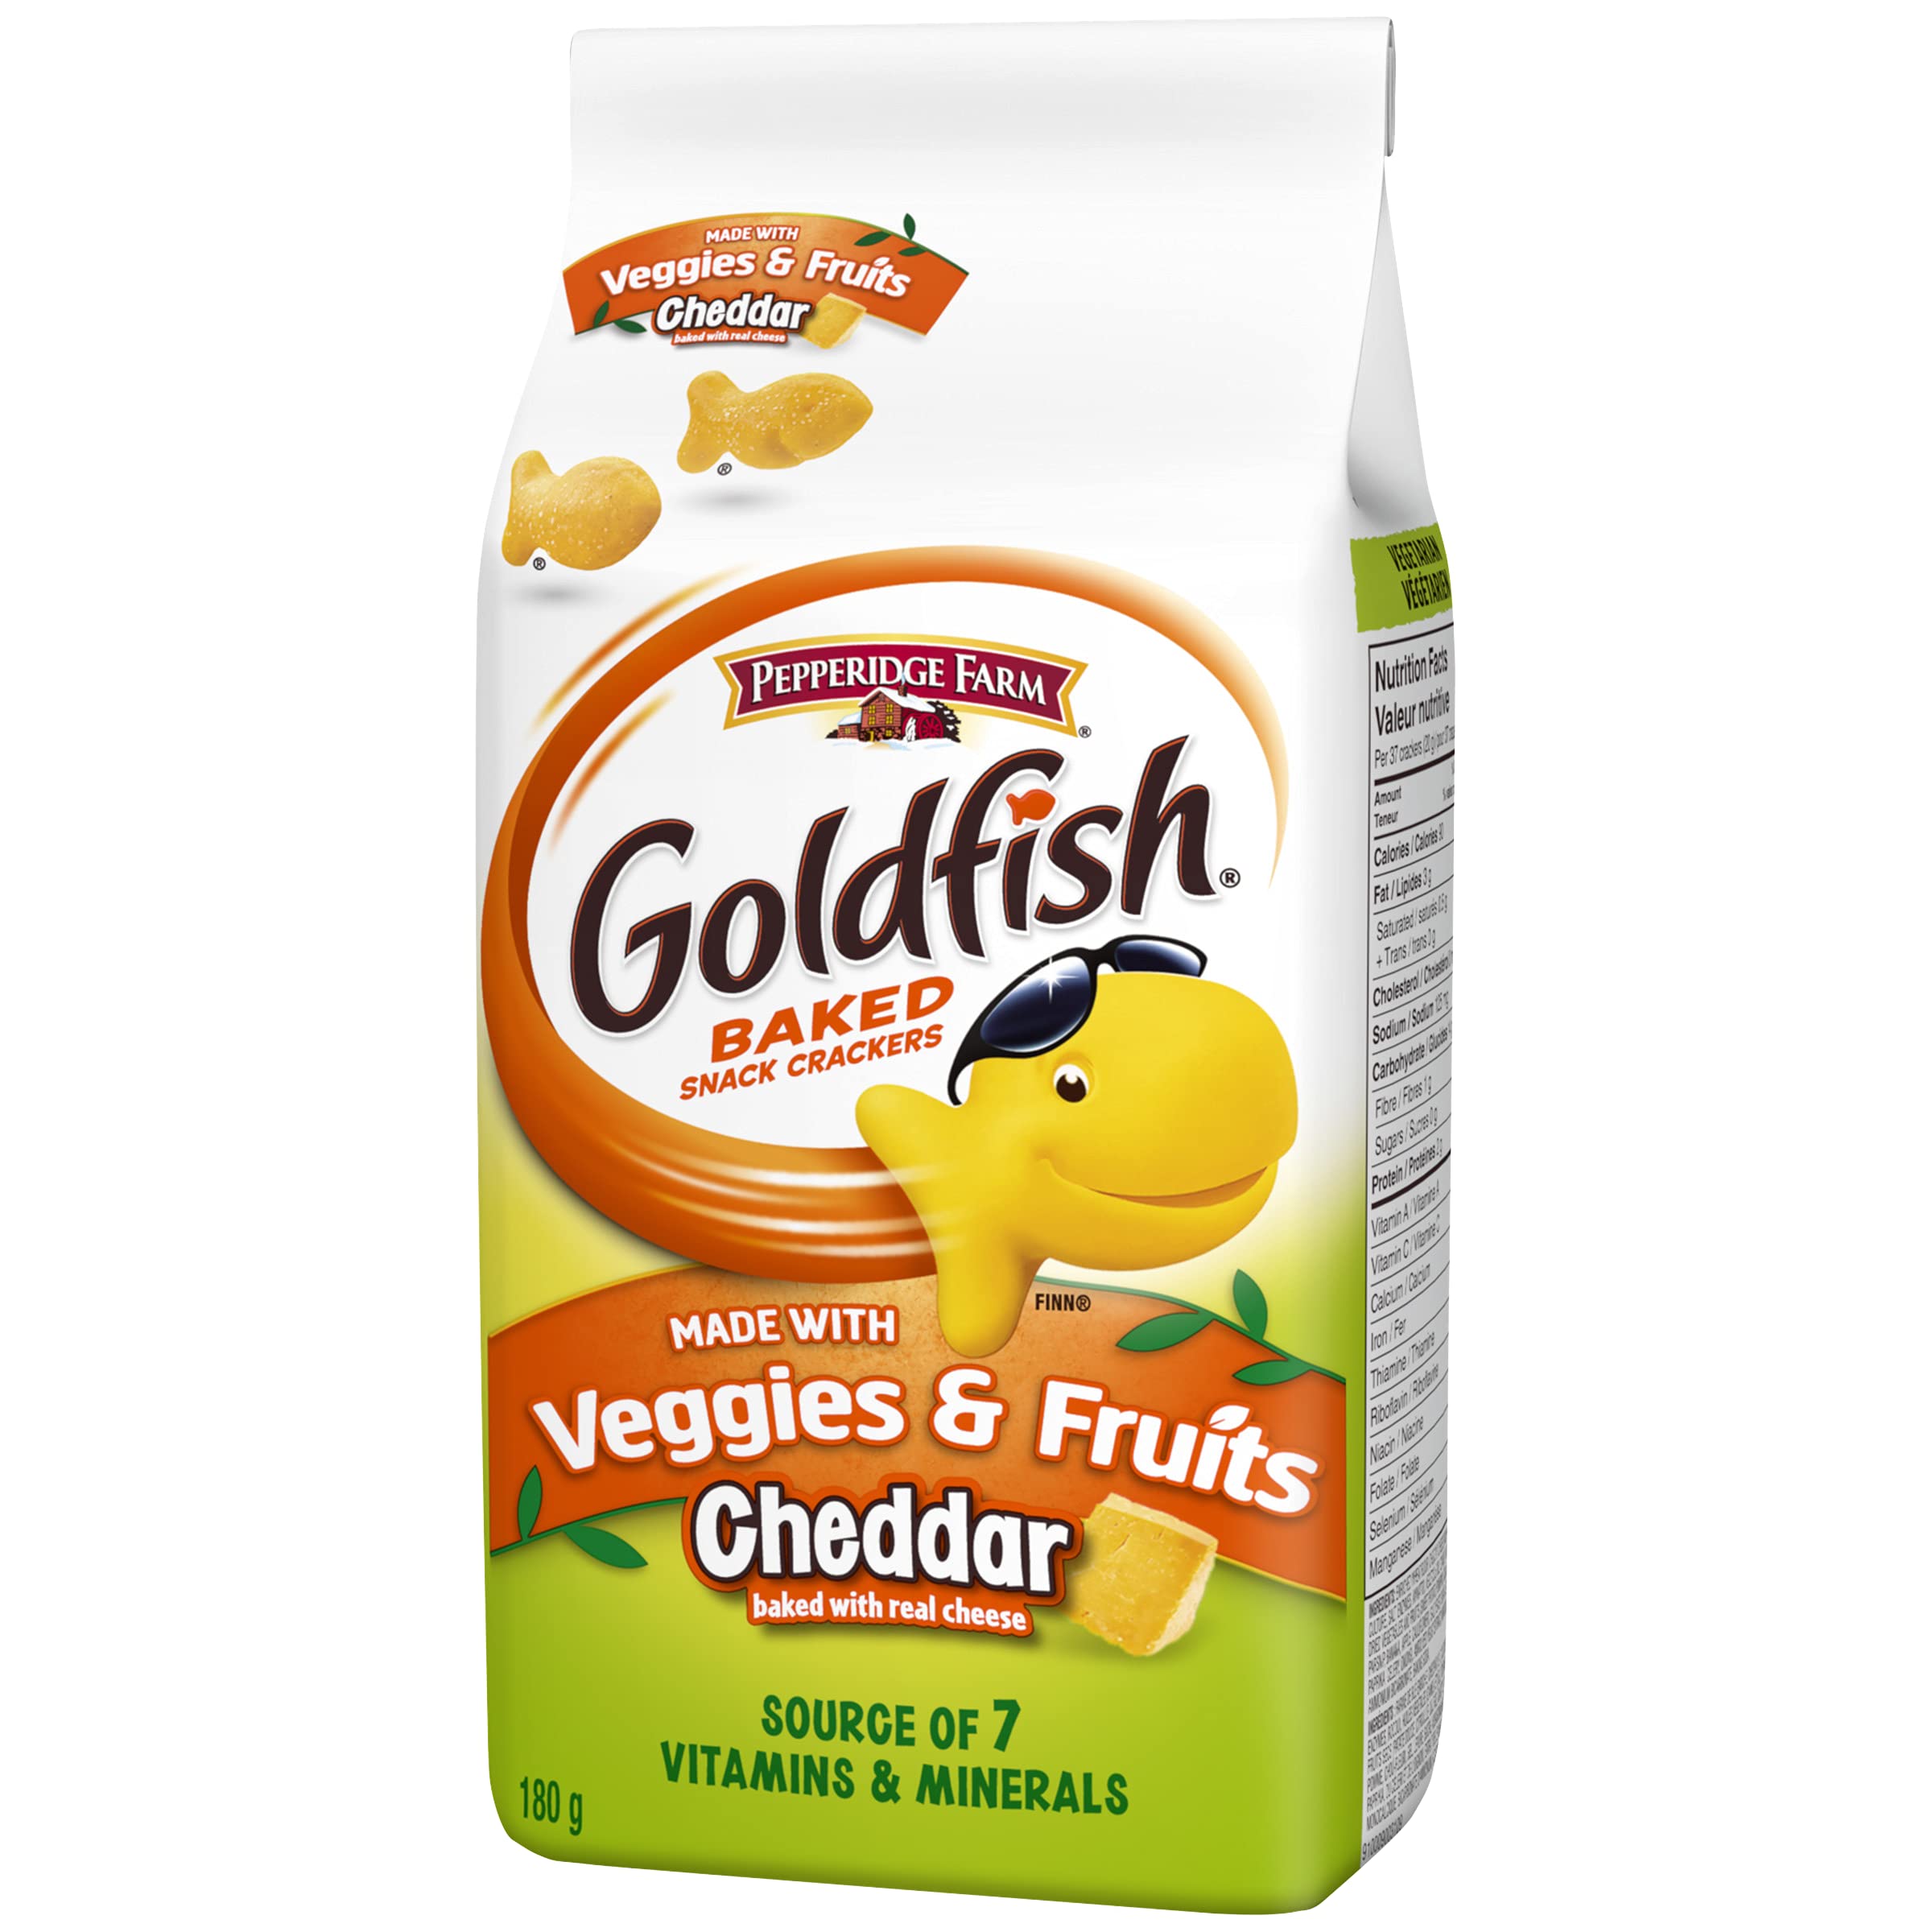 Pepperidge Farm Goldfish Crackers Veggies and Fruit Cheddar Flavour (180g)